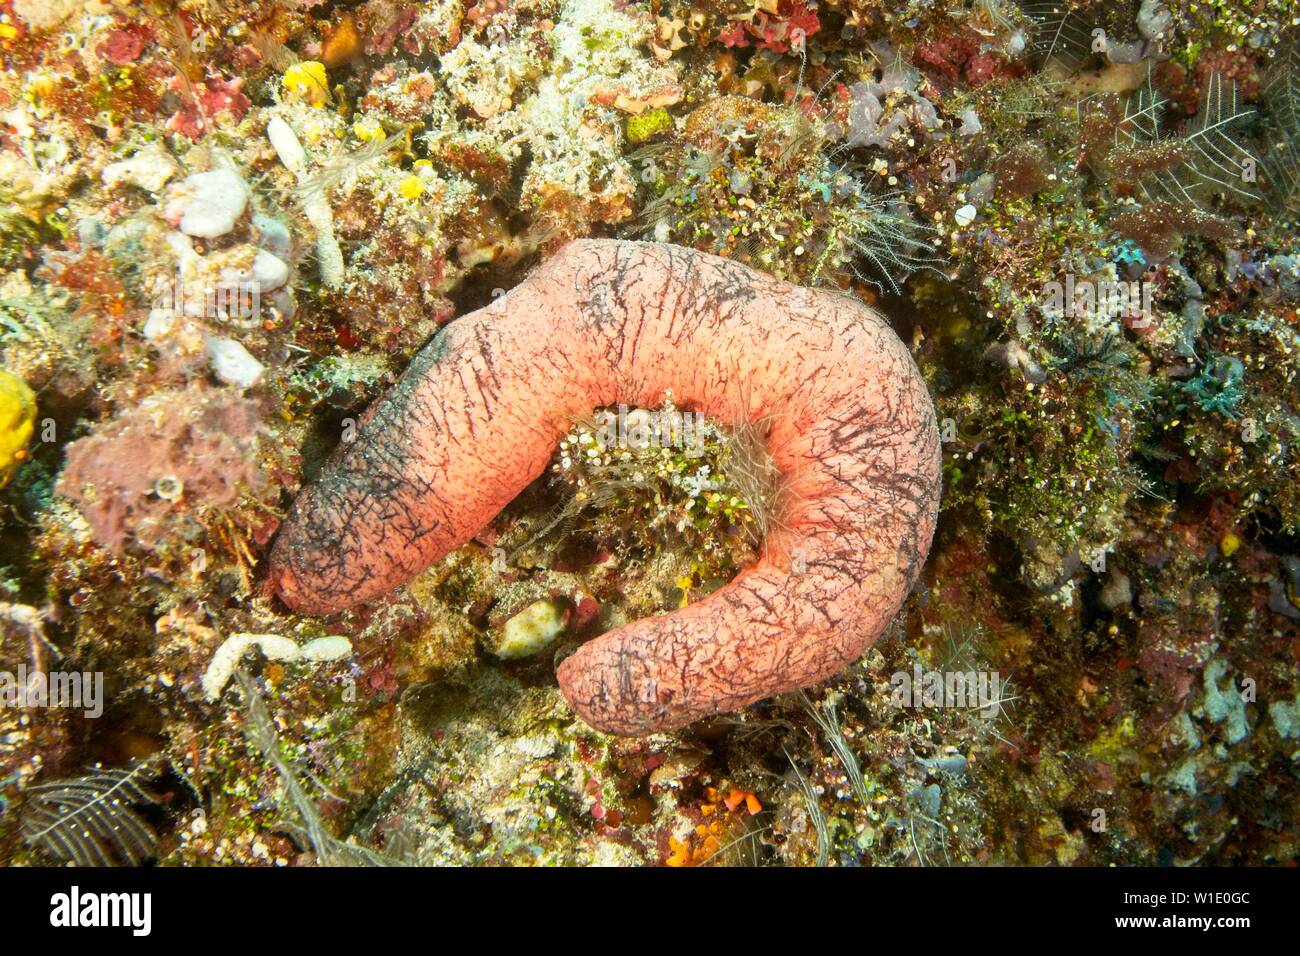 Edible sea cucumber (Holothuria edulis) Indian ocean, Maldives Stock Photo